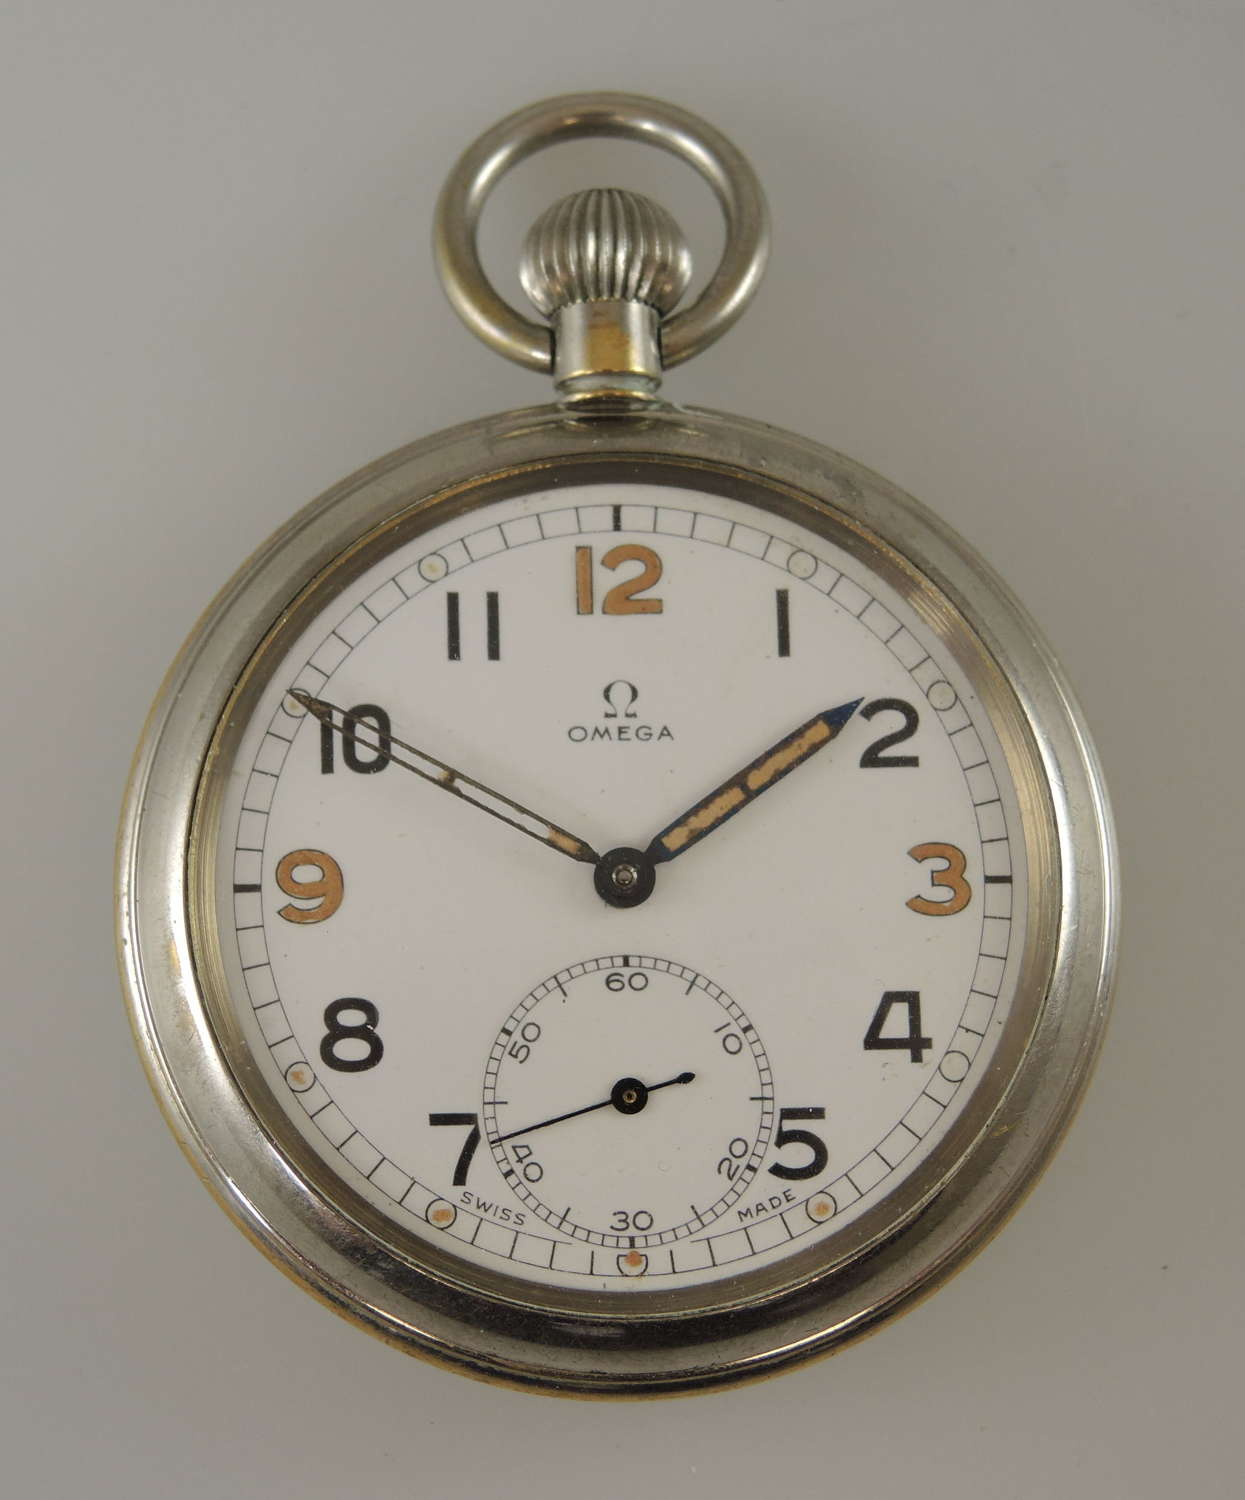 British military Omega pocket watch c1940